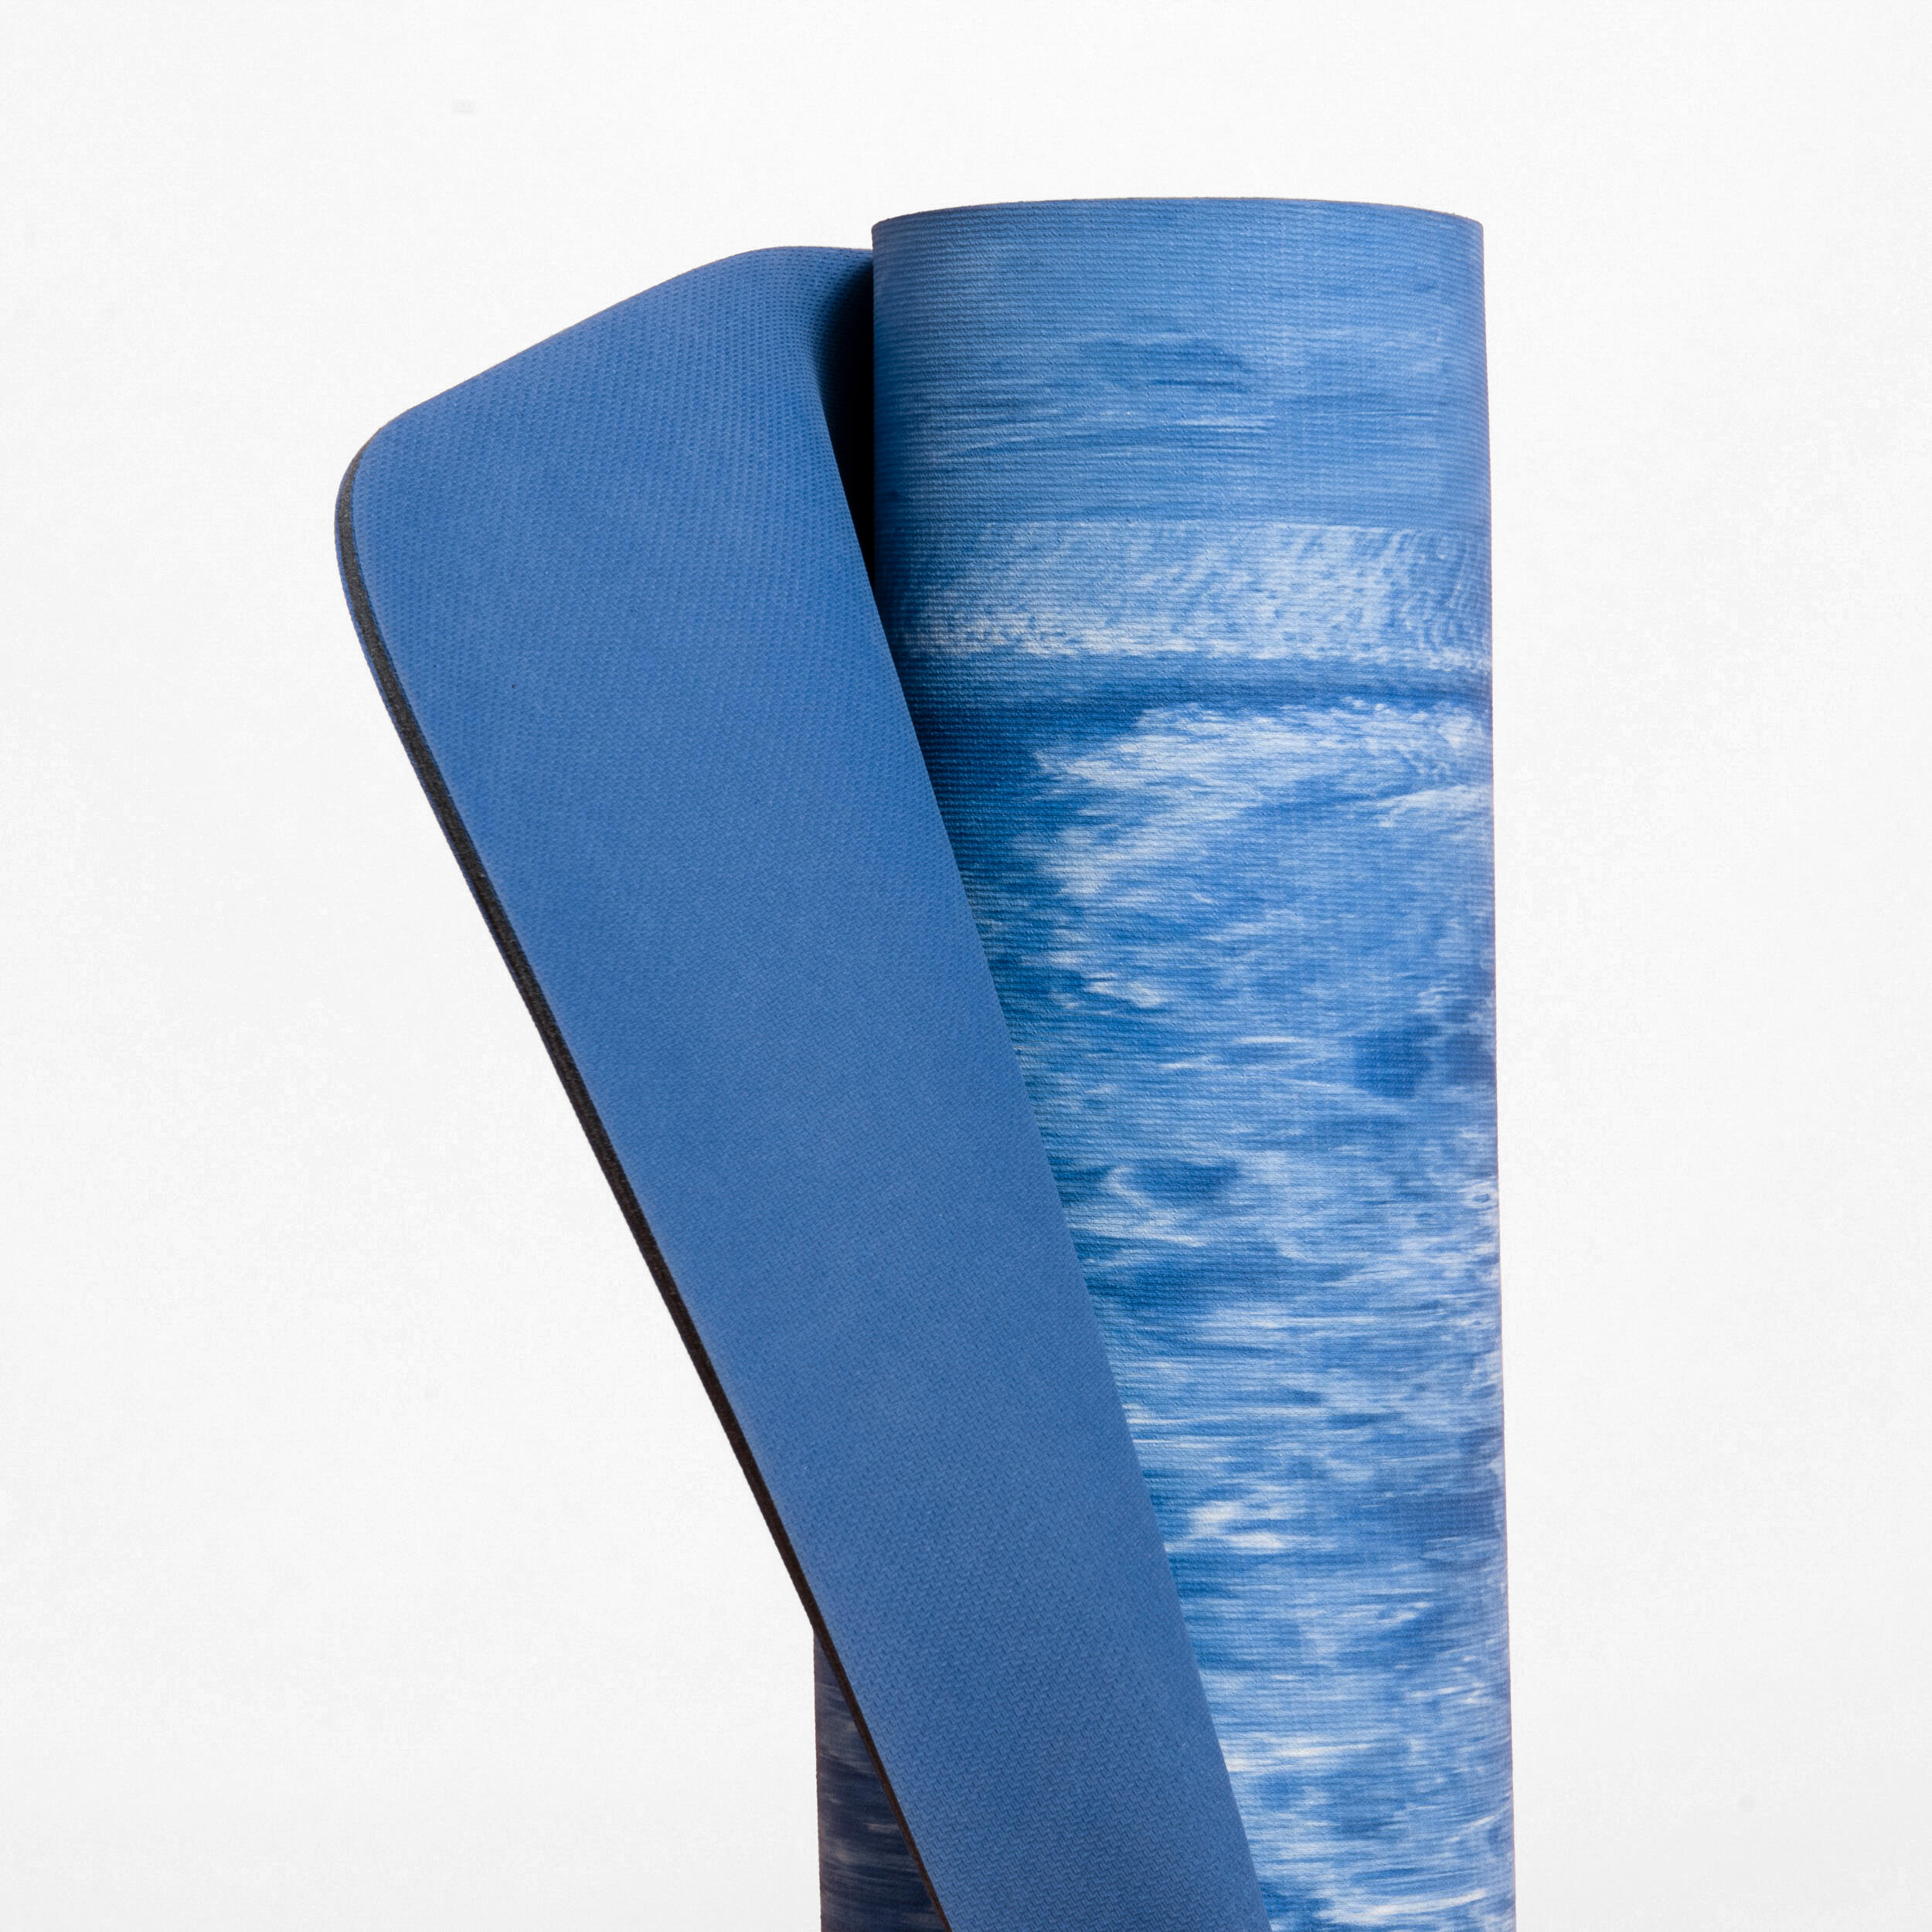 185 cm x 65 cm x 5 mm Yoga Mat Grip - Blue 5/6